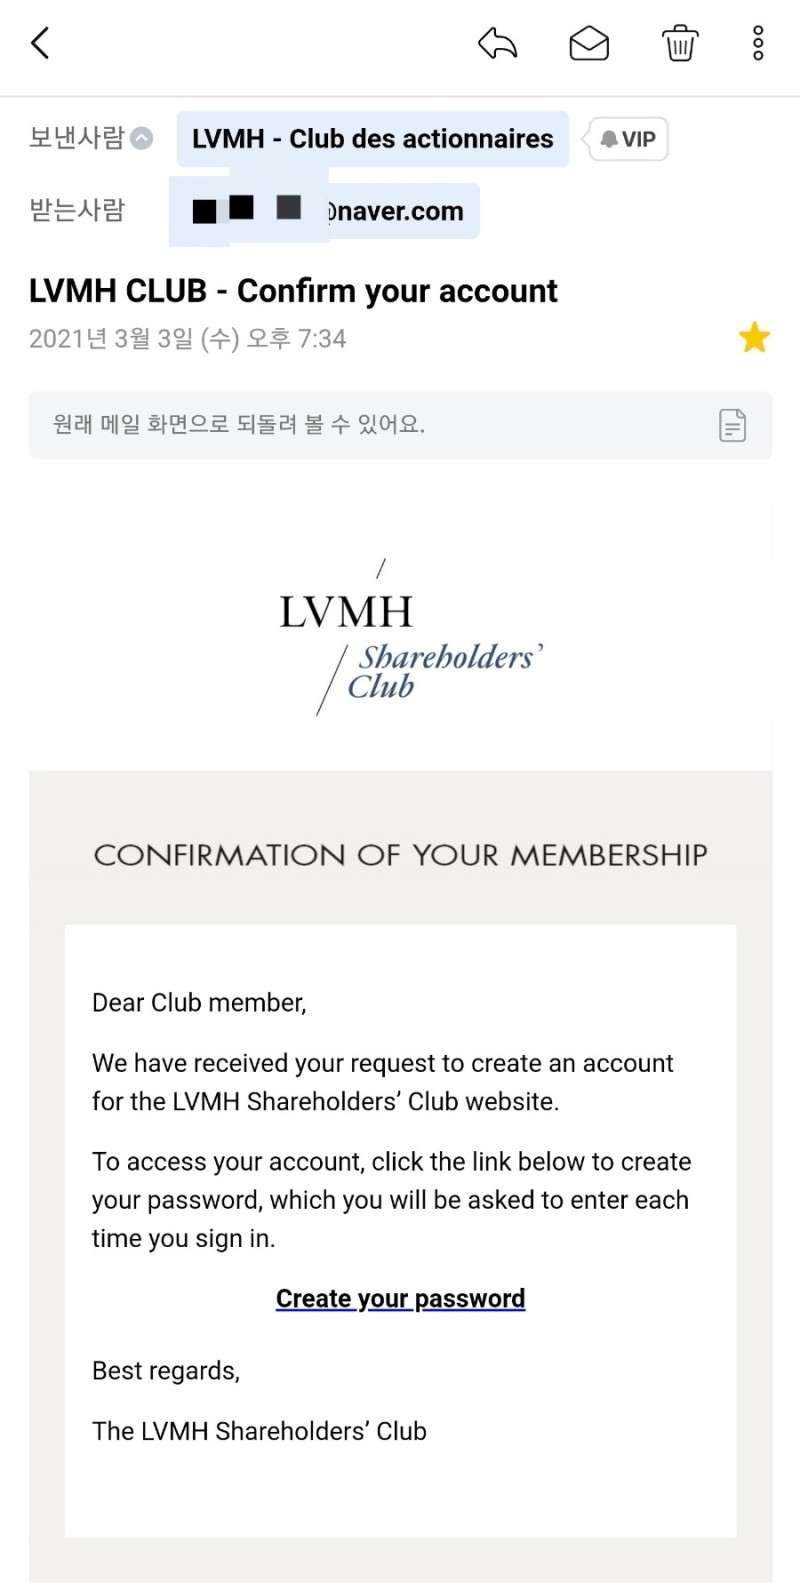 Club des actionnaires - LVMH